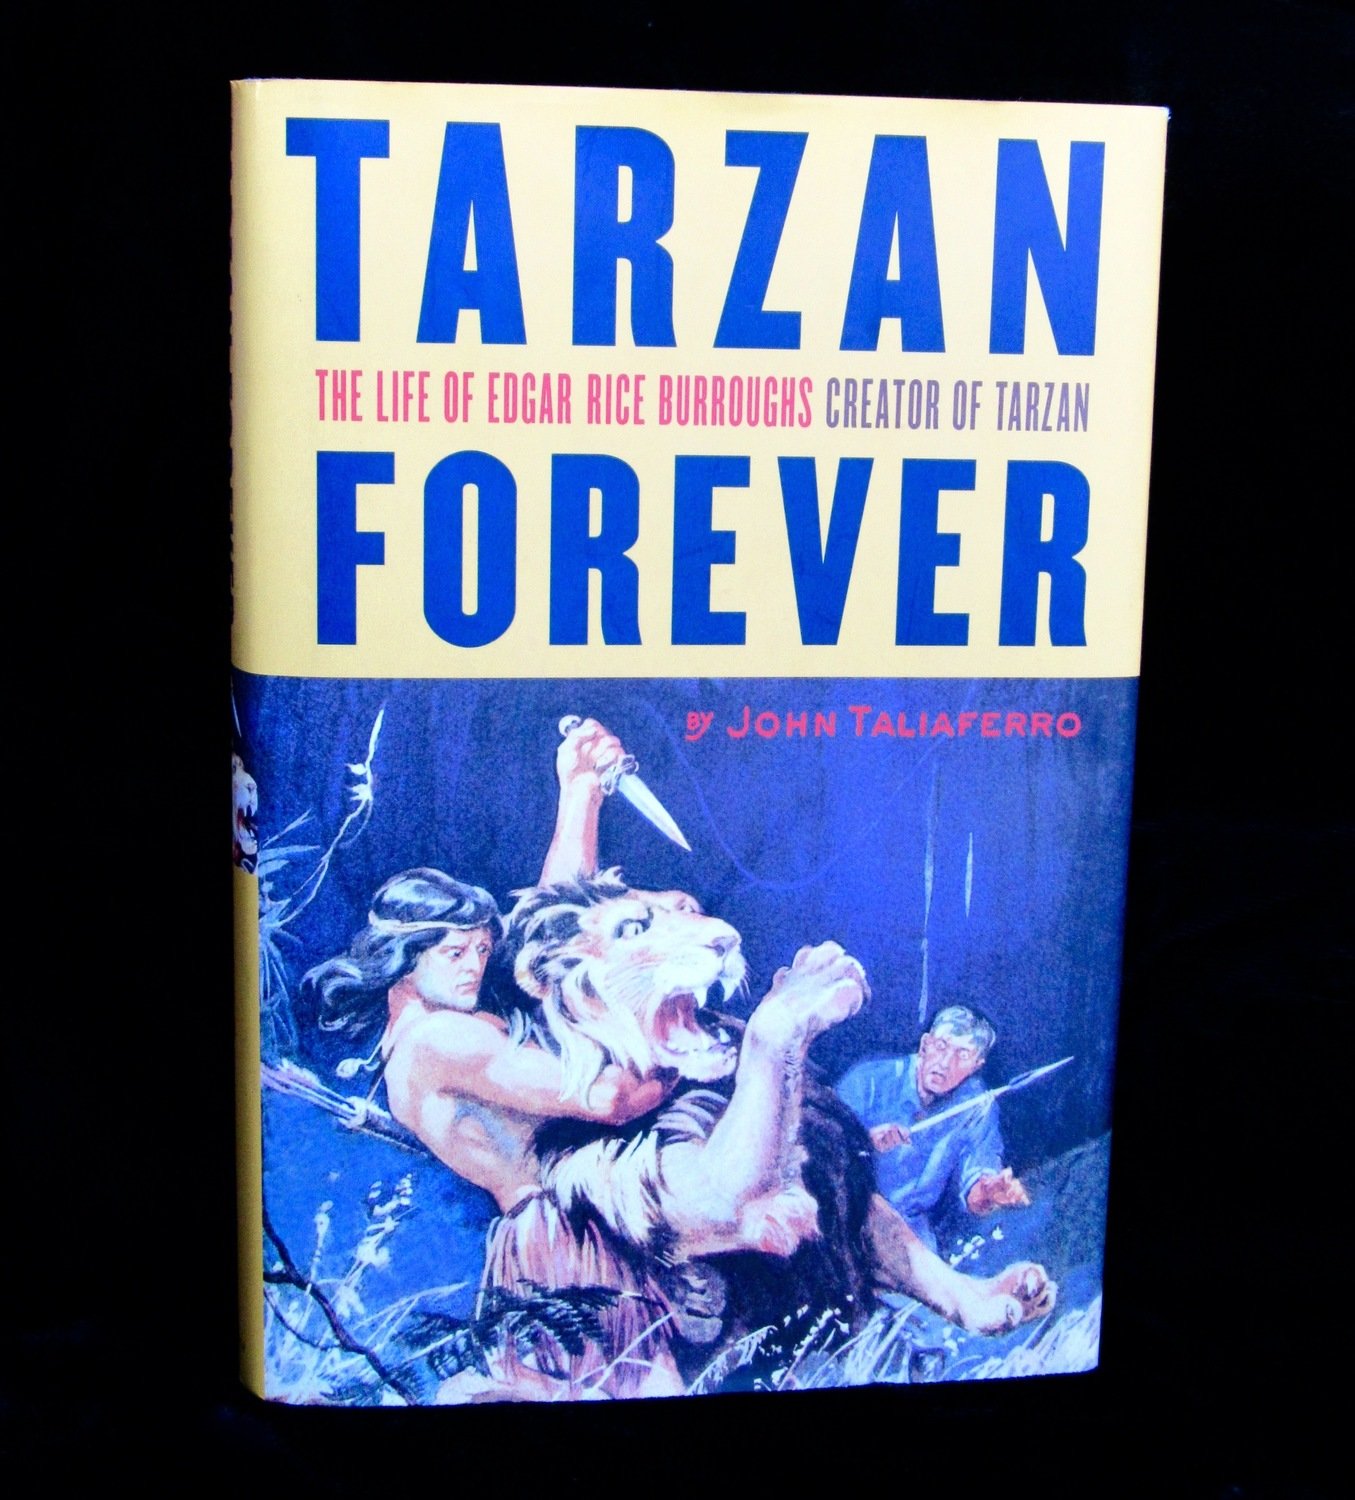 Tarzan Forever